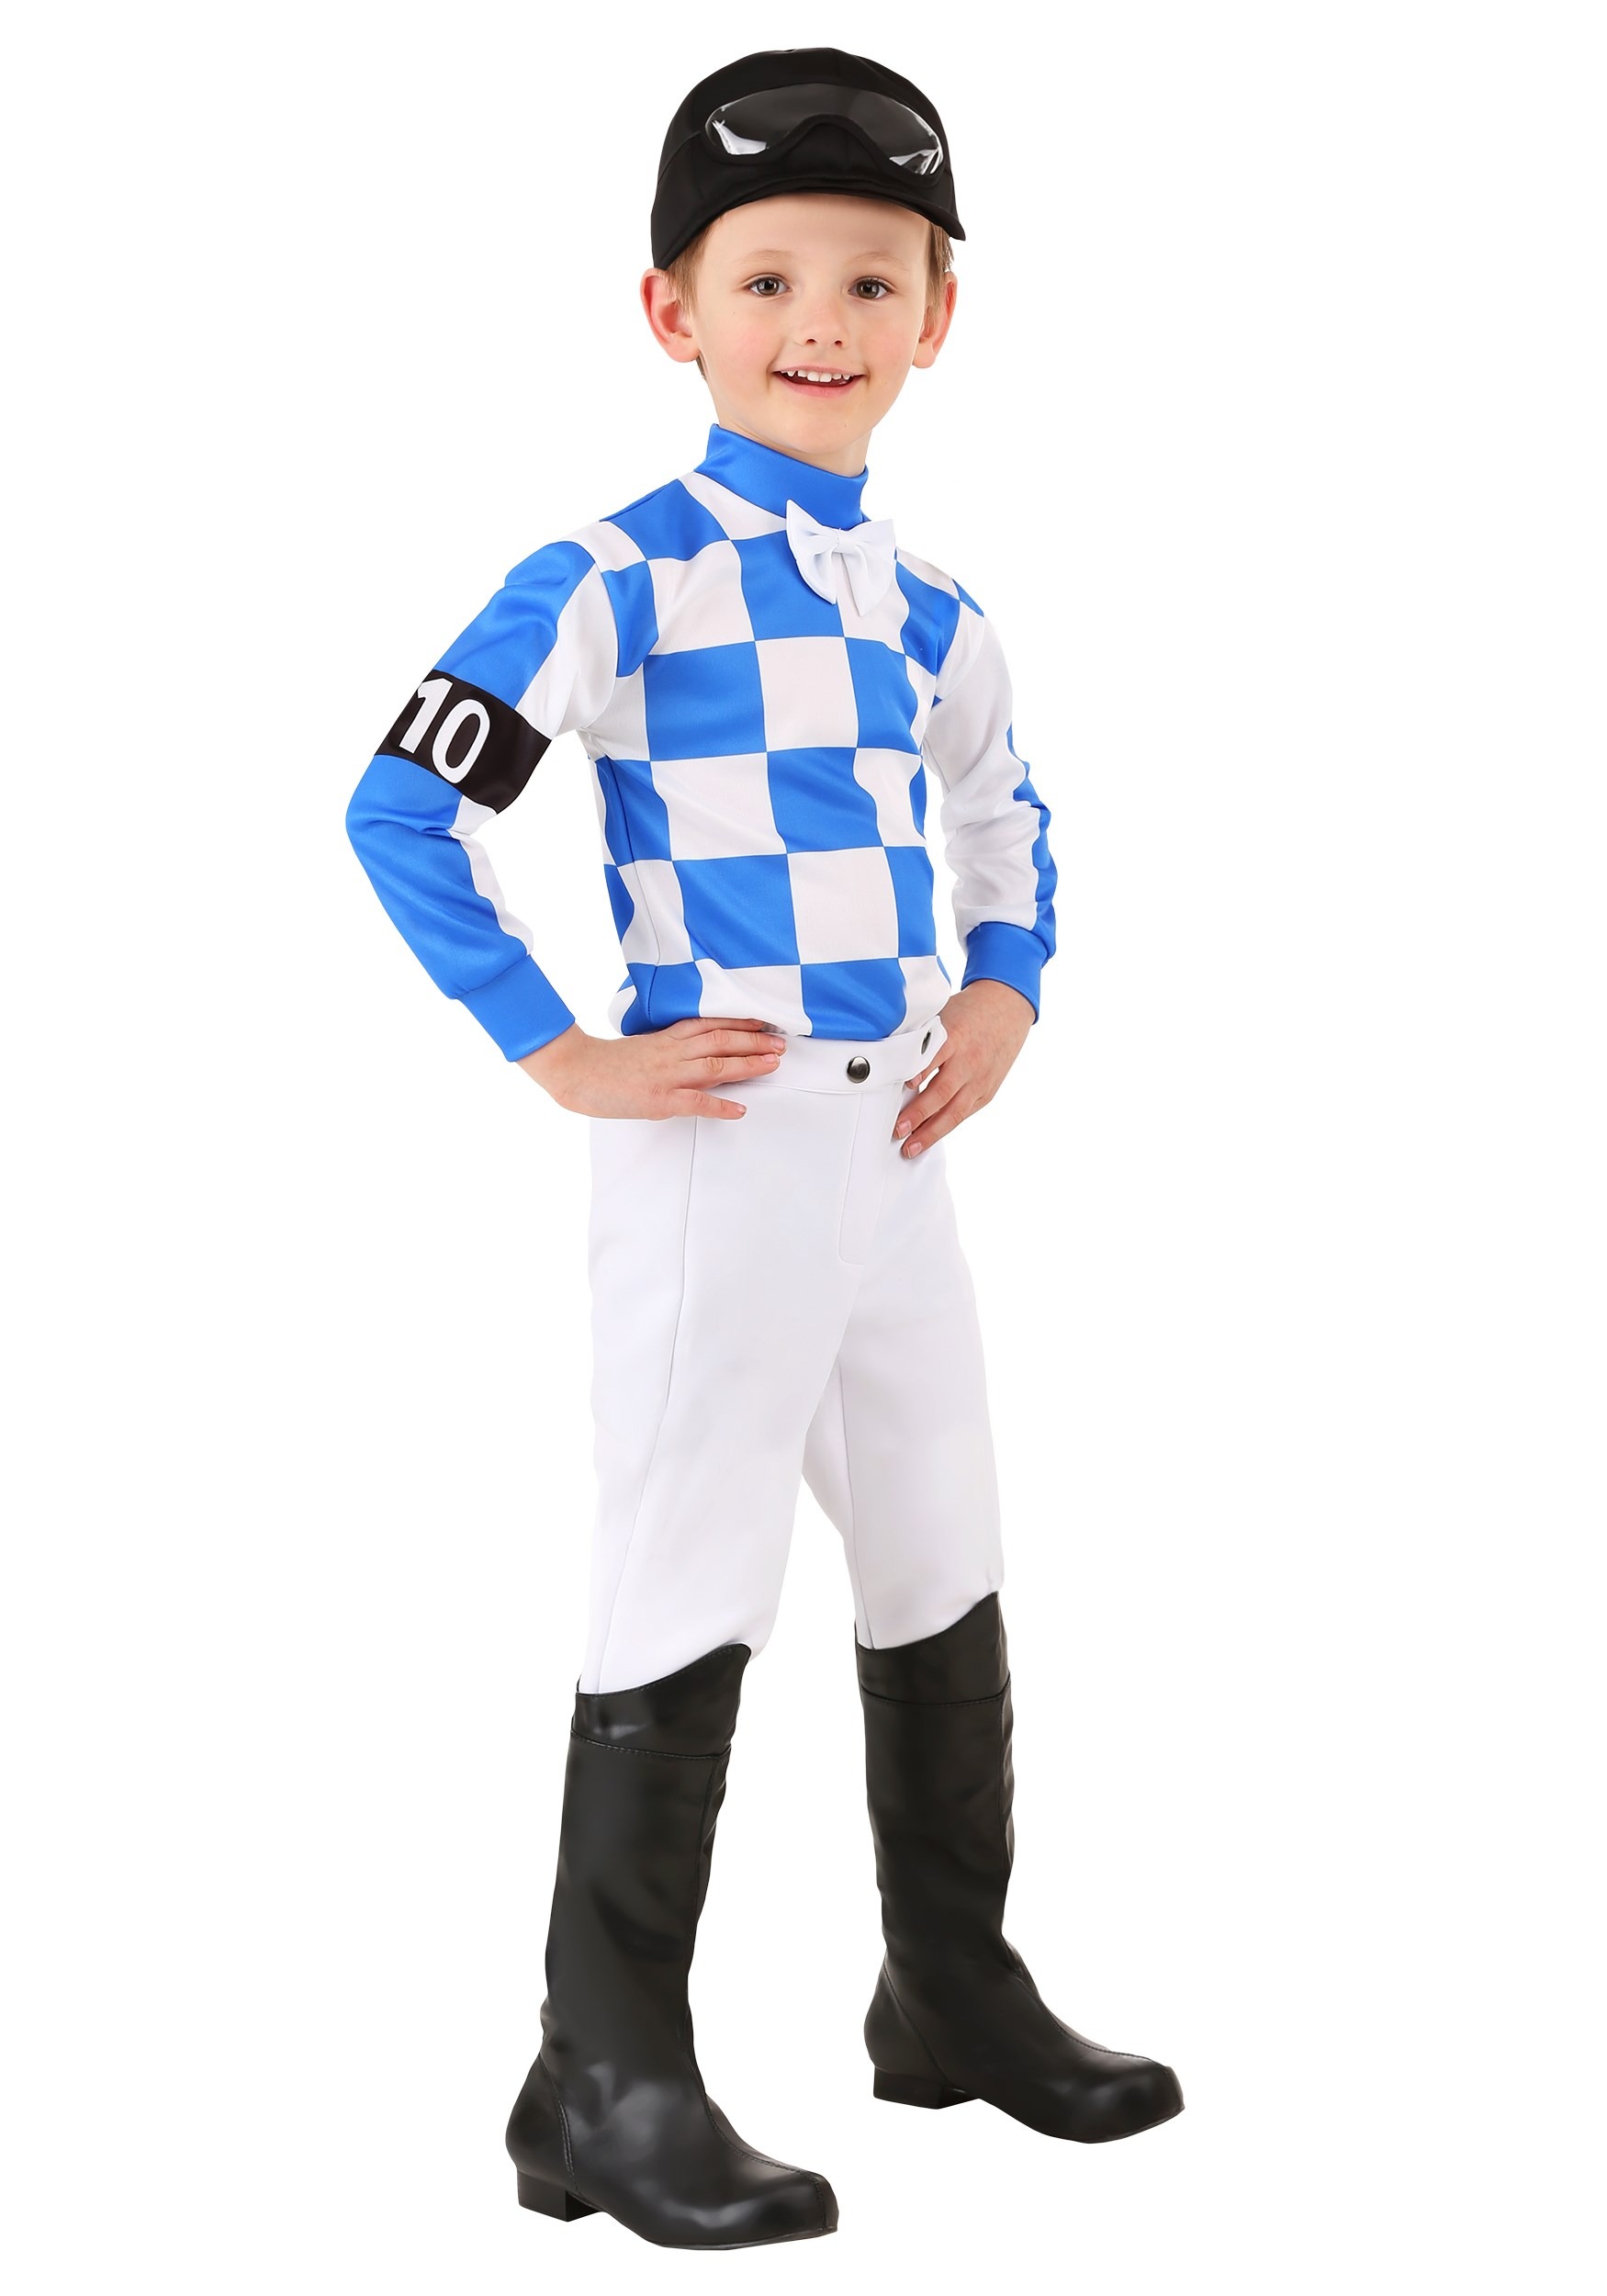 Jockey Toddler Costume